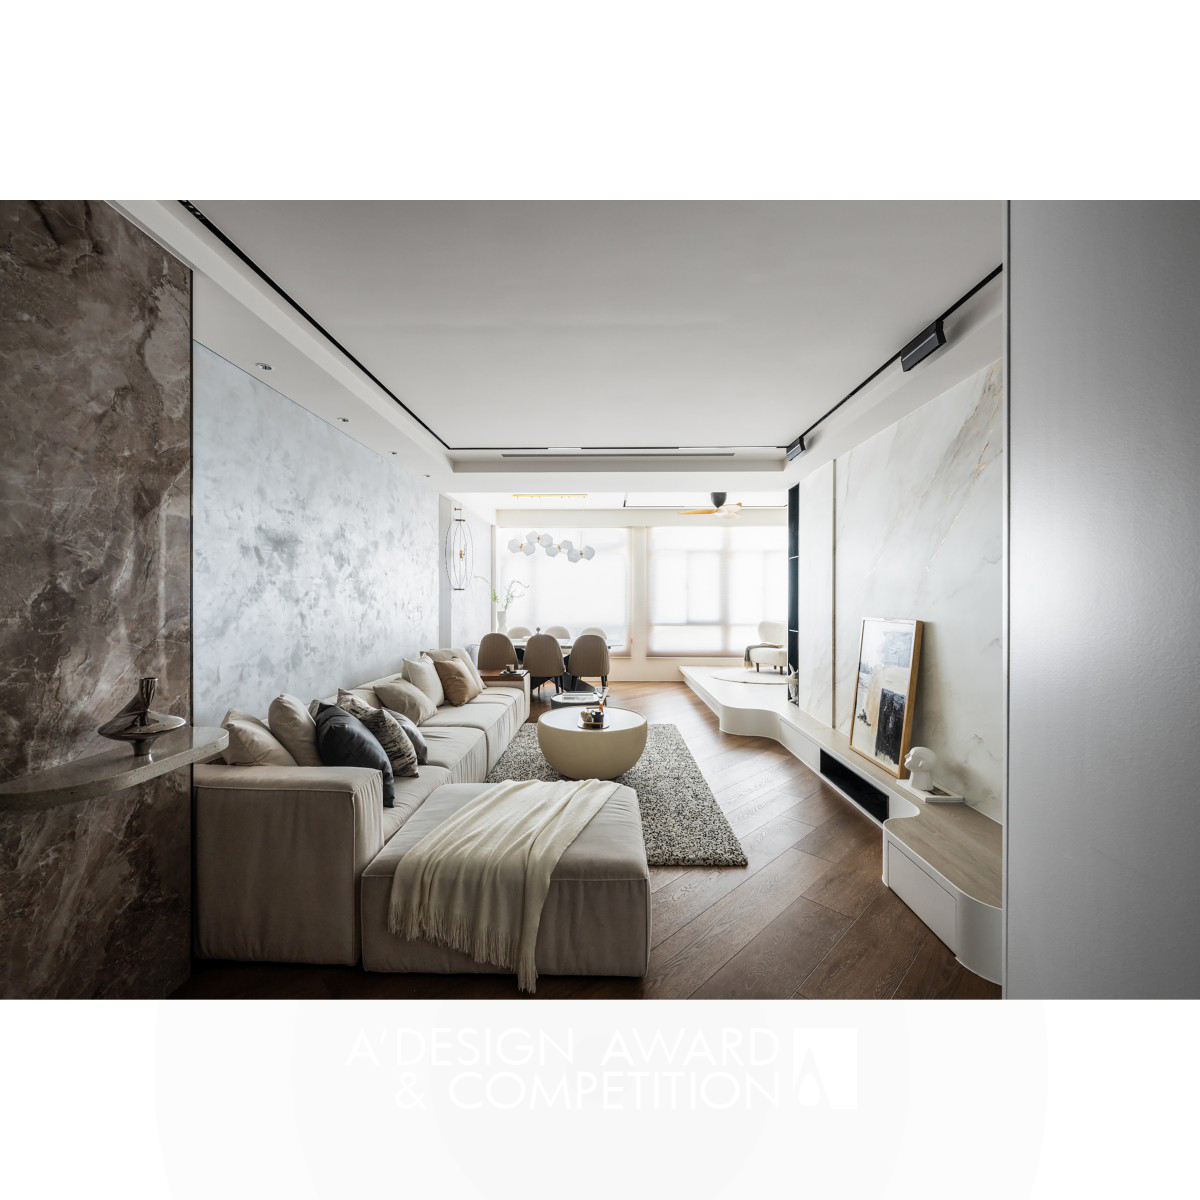 Underlying Elegance Residential House by Yung Yu Chien